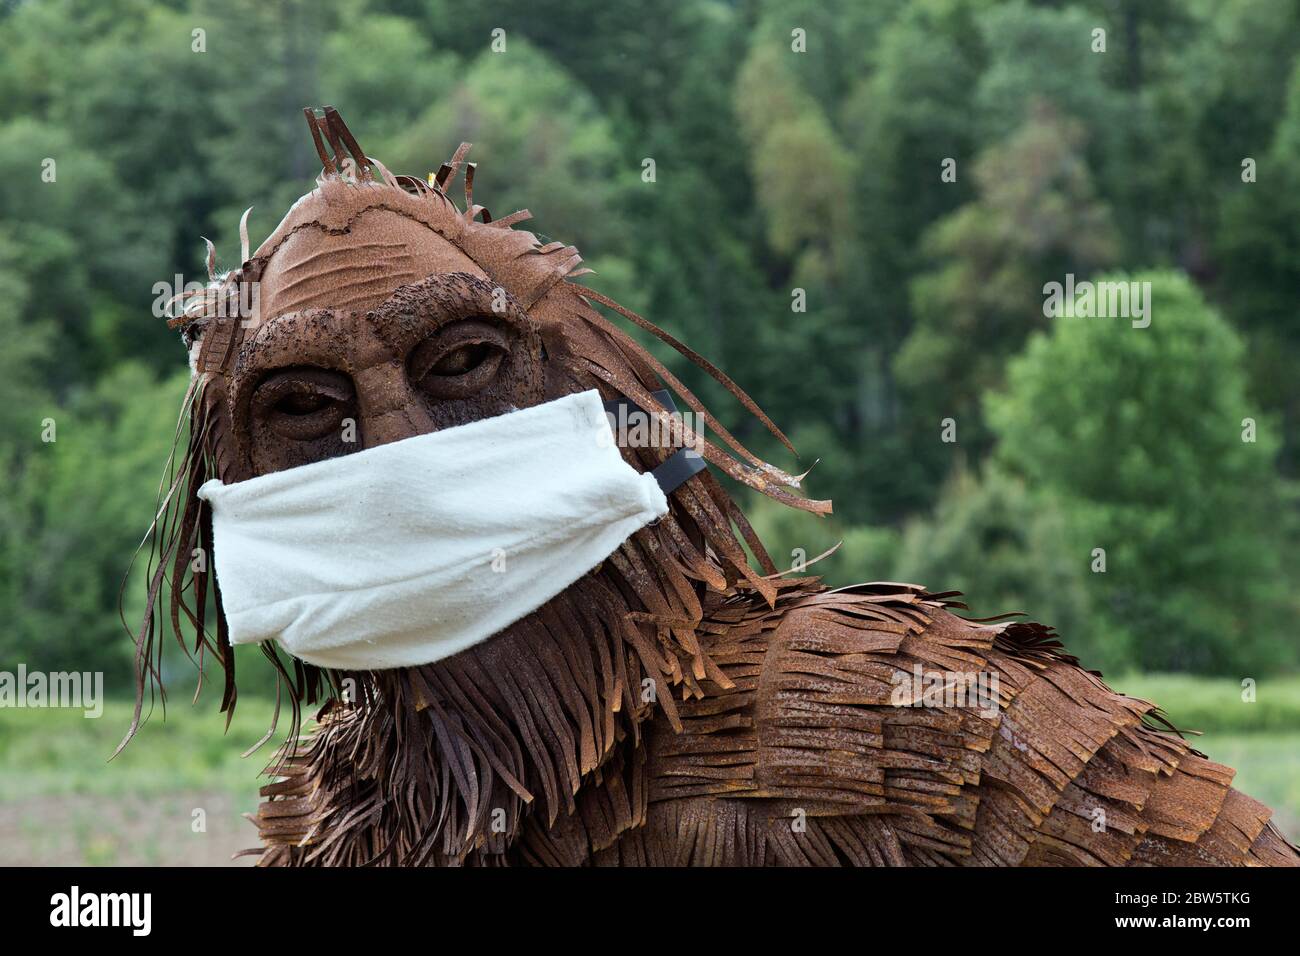 Bigfoot wearing COVID-19 antivirus mask, forest edge. Stock Photo